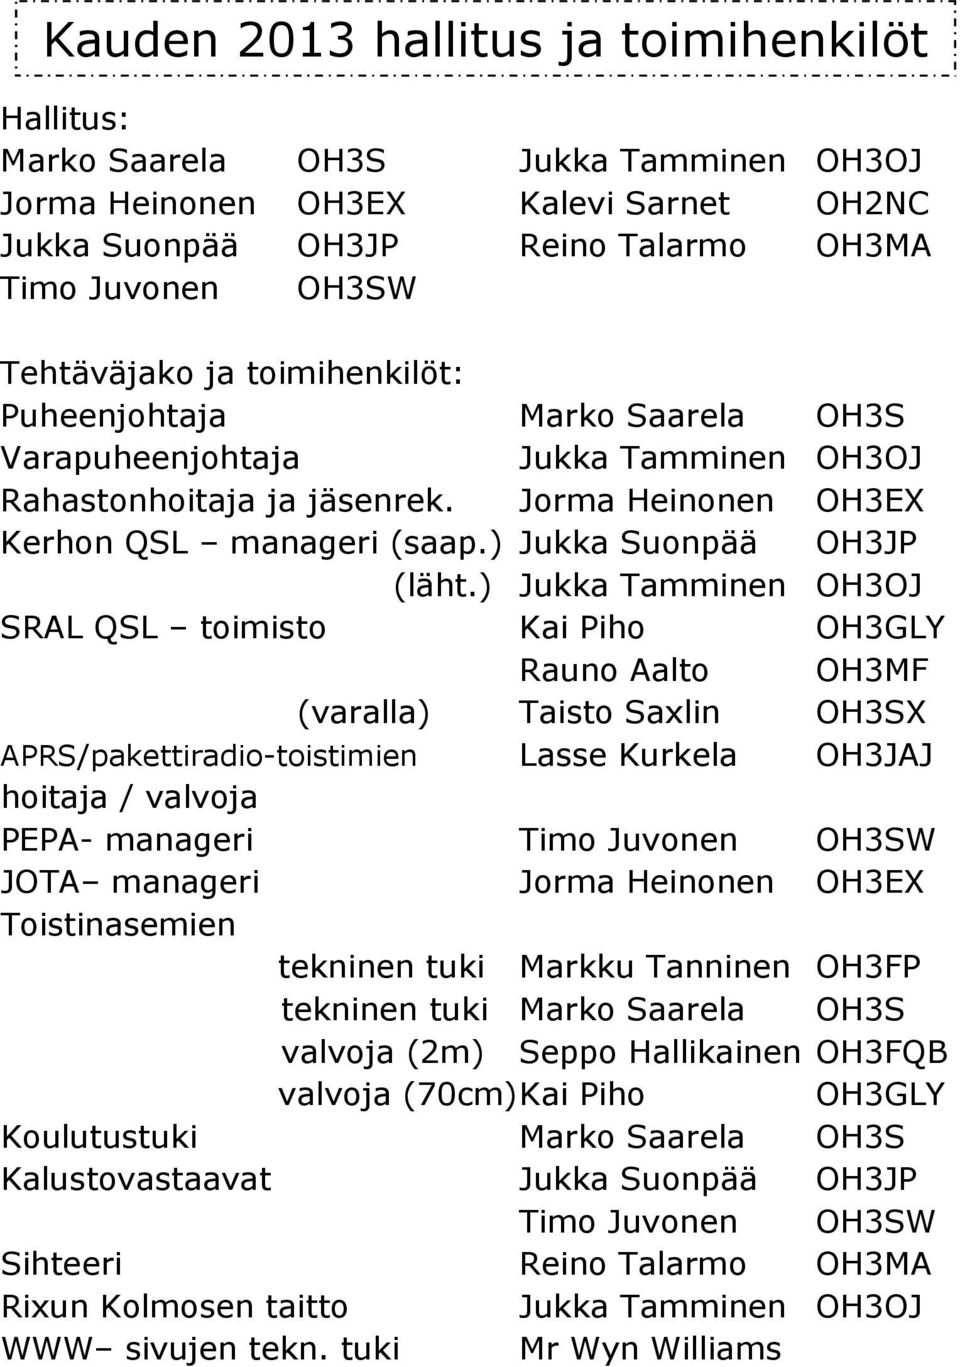 ) Jukka Tamminen OH3OJ SRAL QSL toimisto Kai Piho OH3GLY Rauno Aalto OH3MF (varalla) Taisto Saxlin OH3SX APRS/pakettiradio-toistimien Lasse Kurkela OH3JAJ hoitaja / valvoja PEPA- manageri Timo